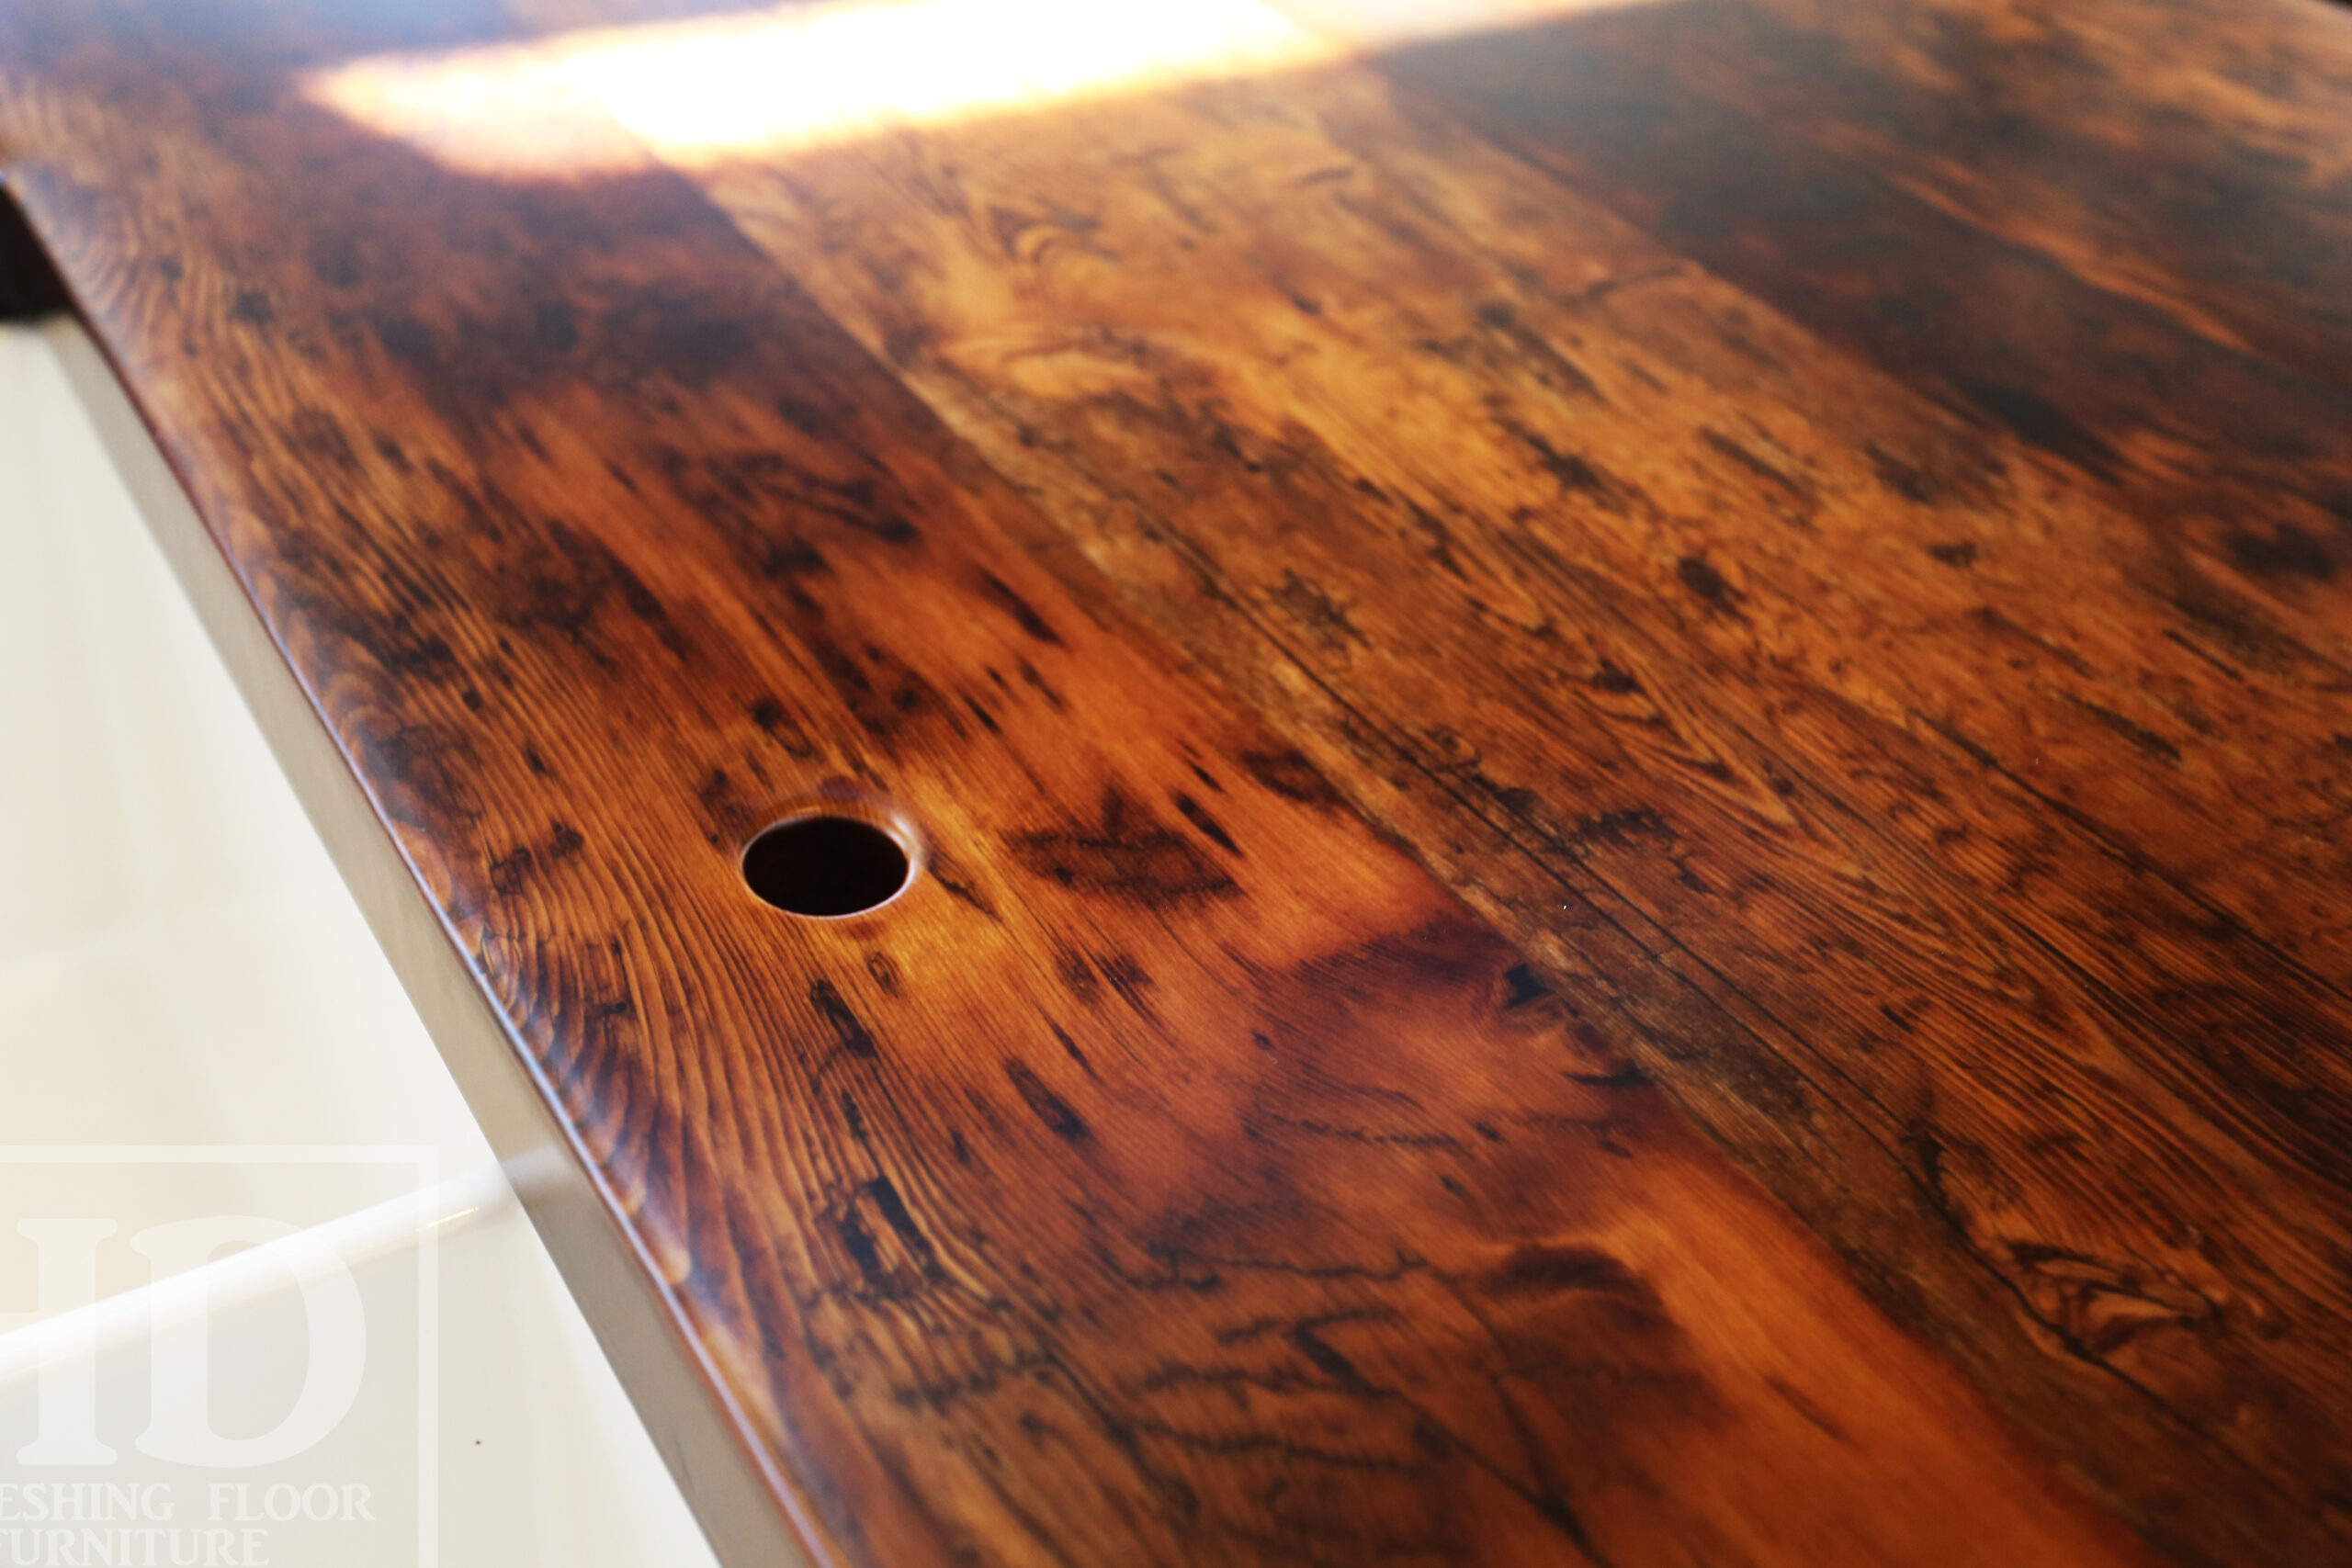 Custom Reclaimed Wood Island Top - 2" Hemlock Threshing Floor Construction - Original Ontario barnwood edges & distressing maintained - Premium epoxy + satin polyurethane finish - www.table.ca